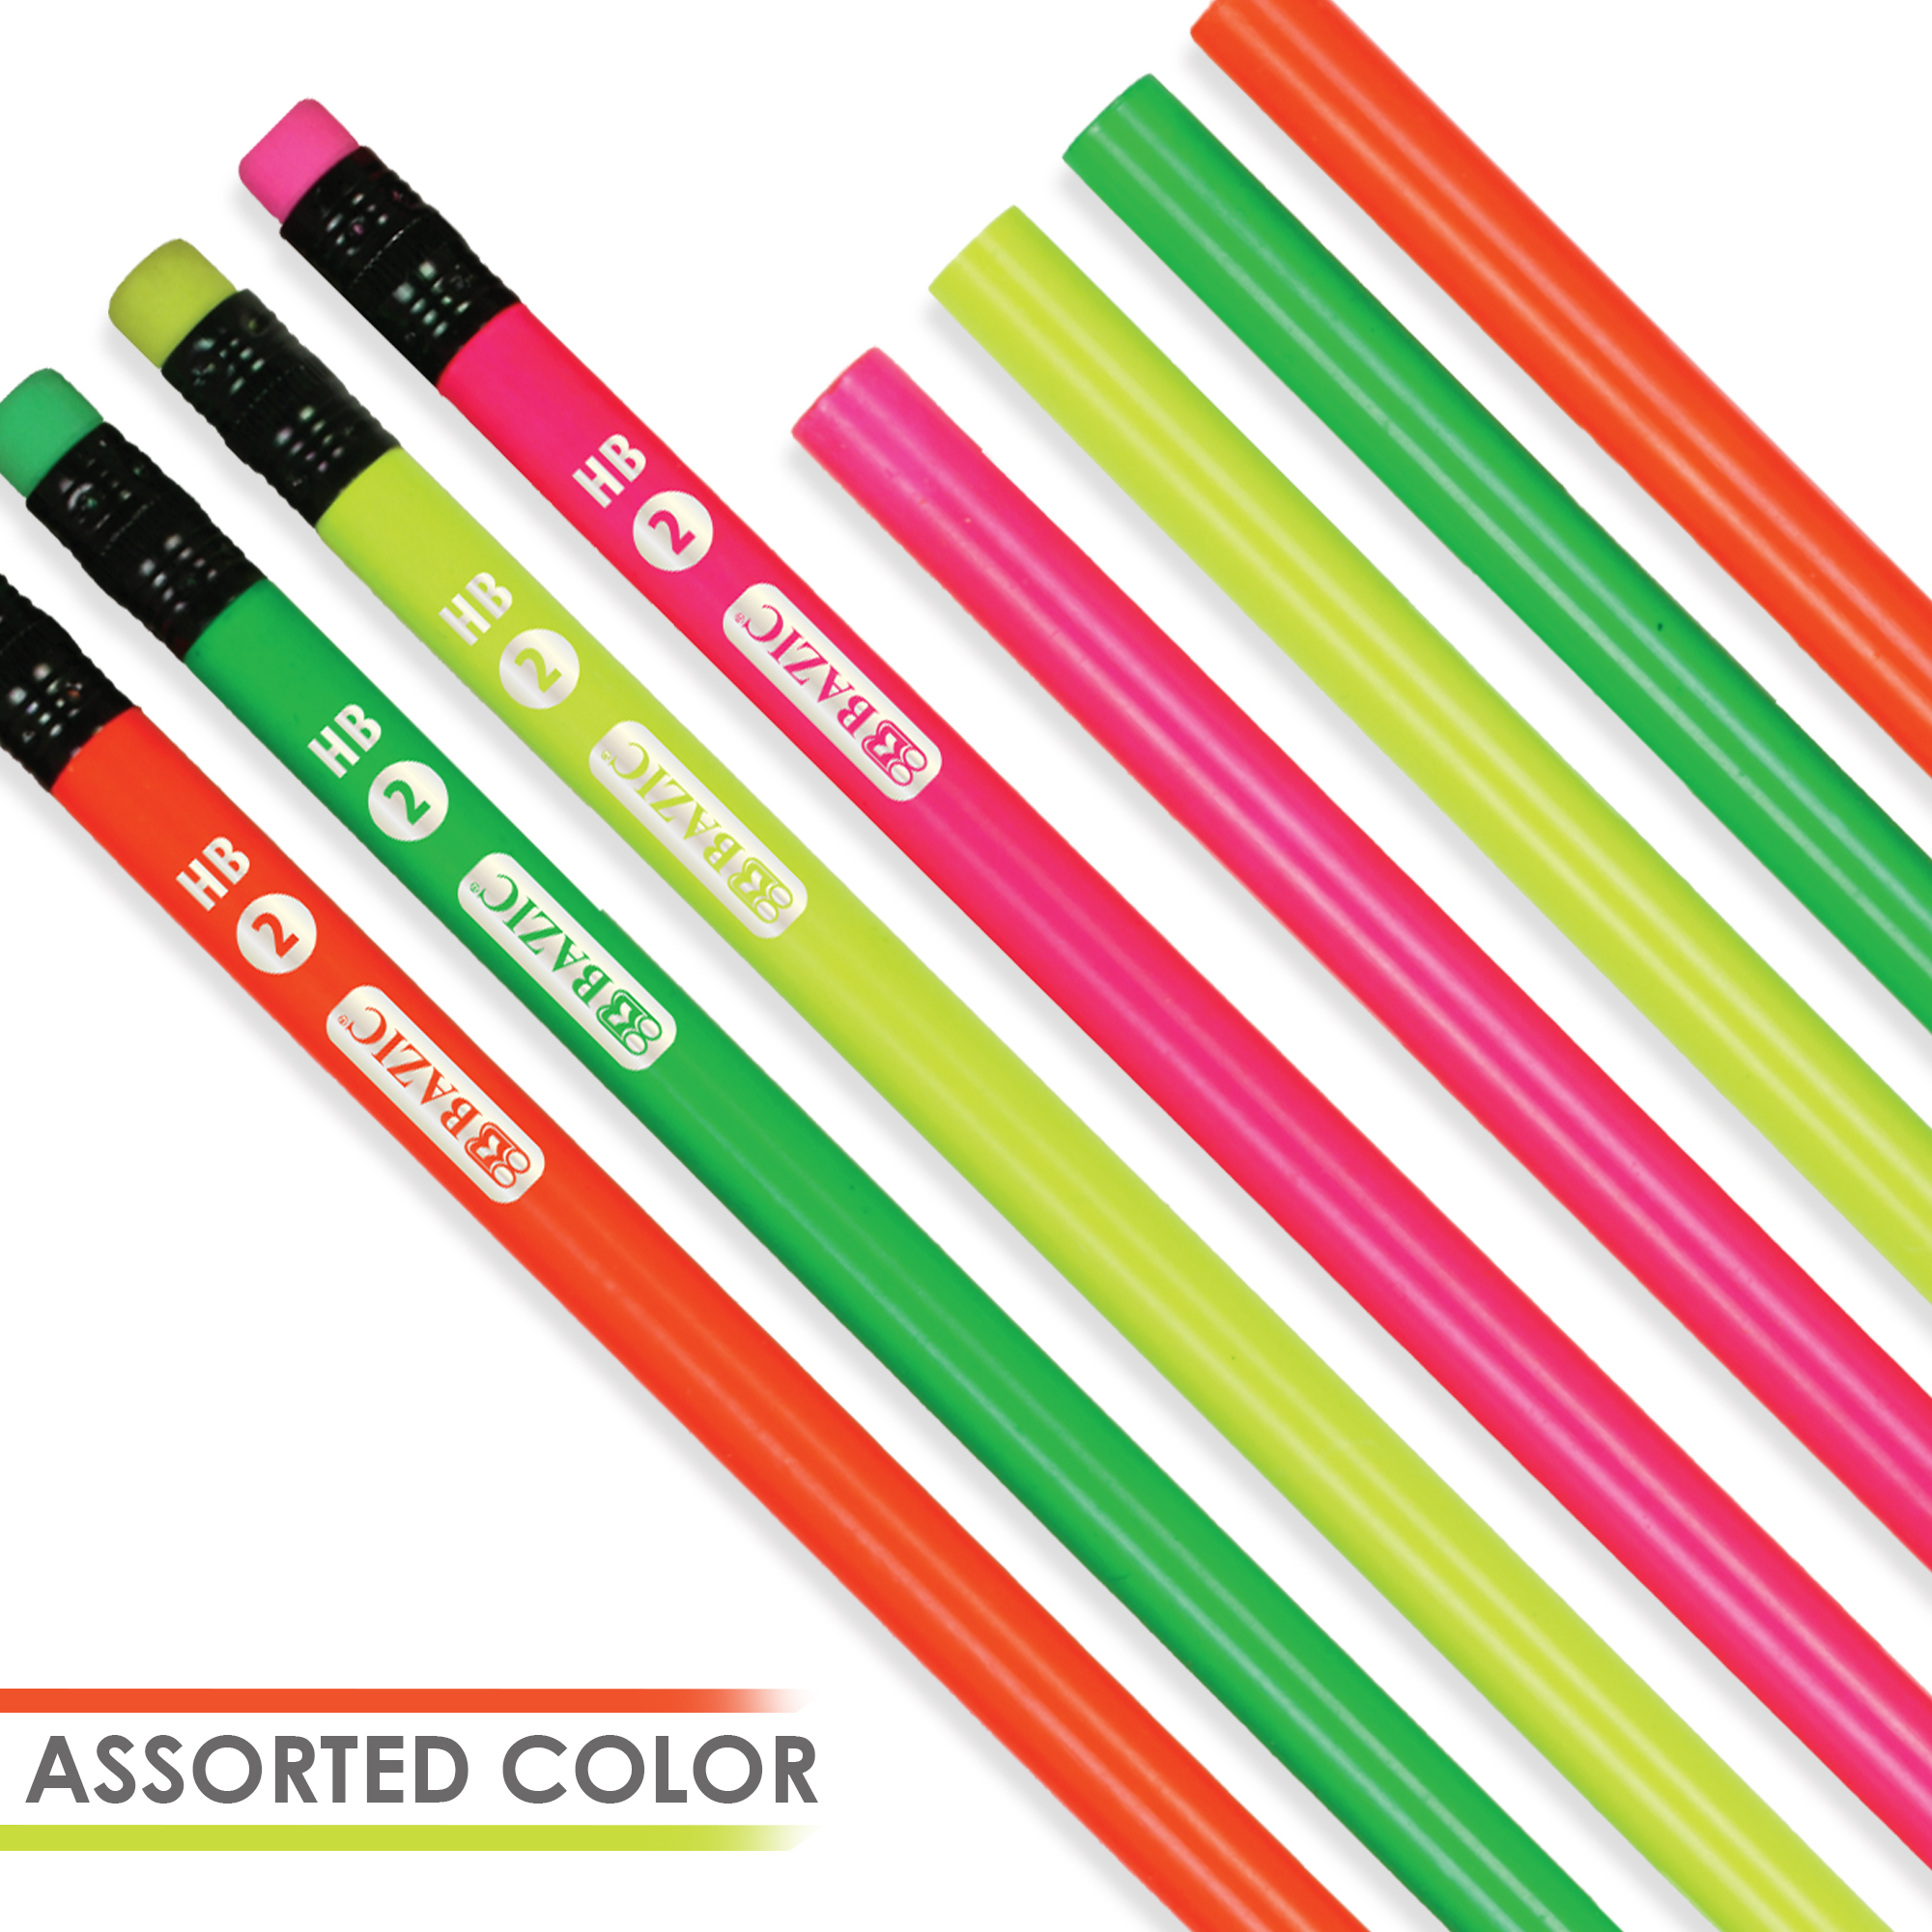 Bazic Products Bazic 8 Neon Colored Pencils / Box Qty - 24